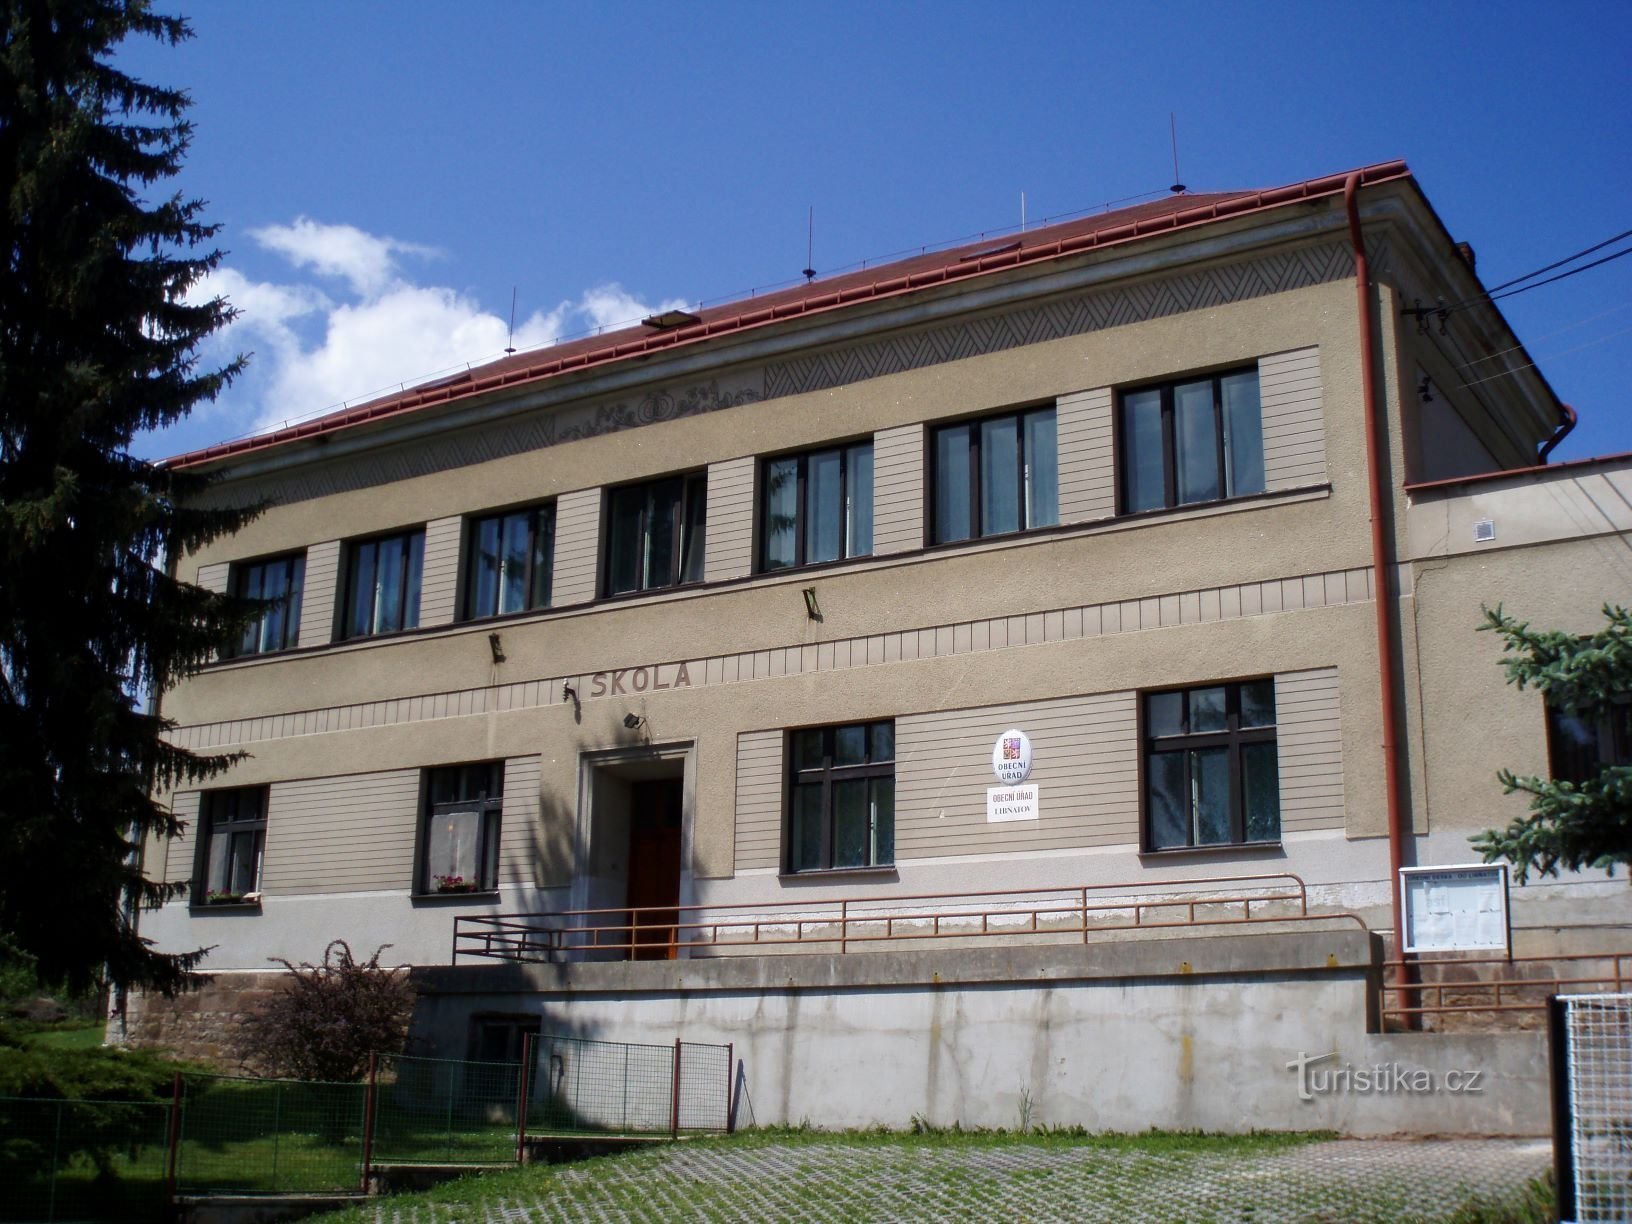 Prvotni videz današnje občinske pisarne (Libňatov, 12.5.2009. XNUMX. XNUMX)